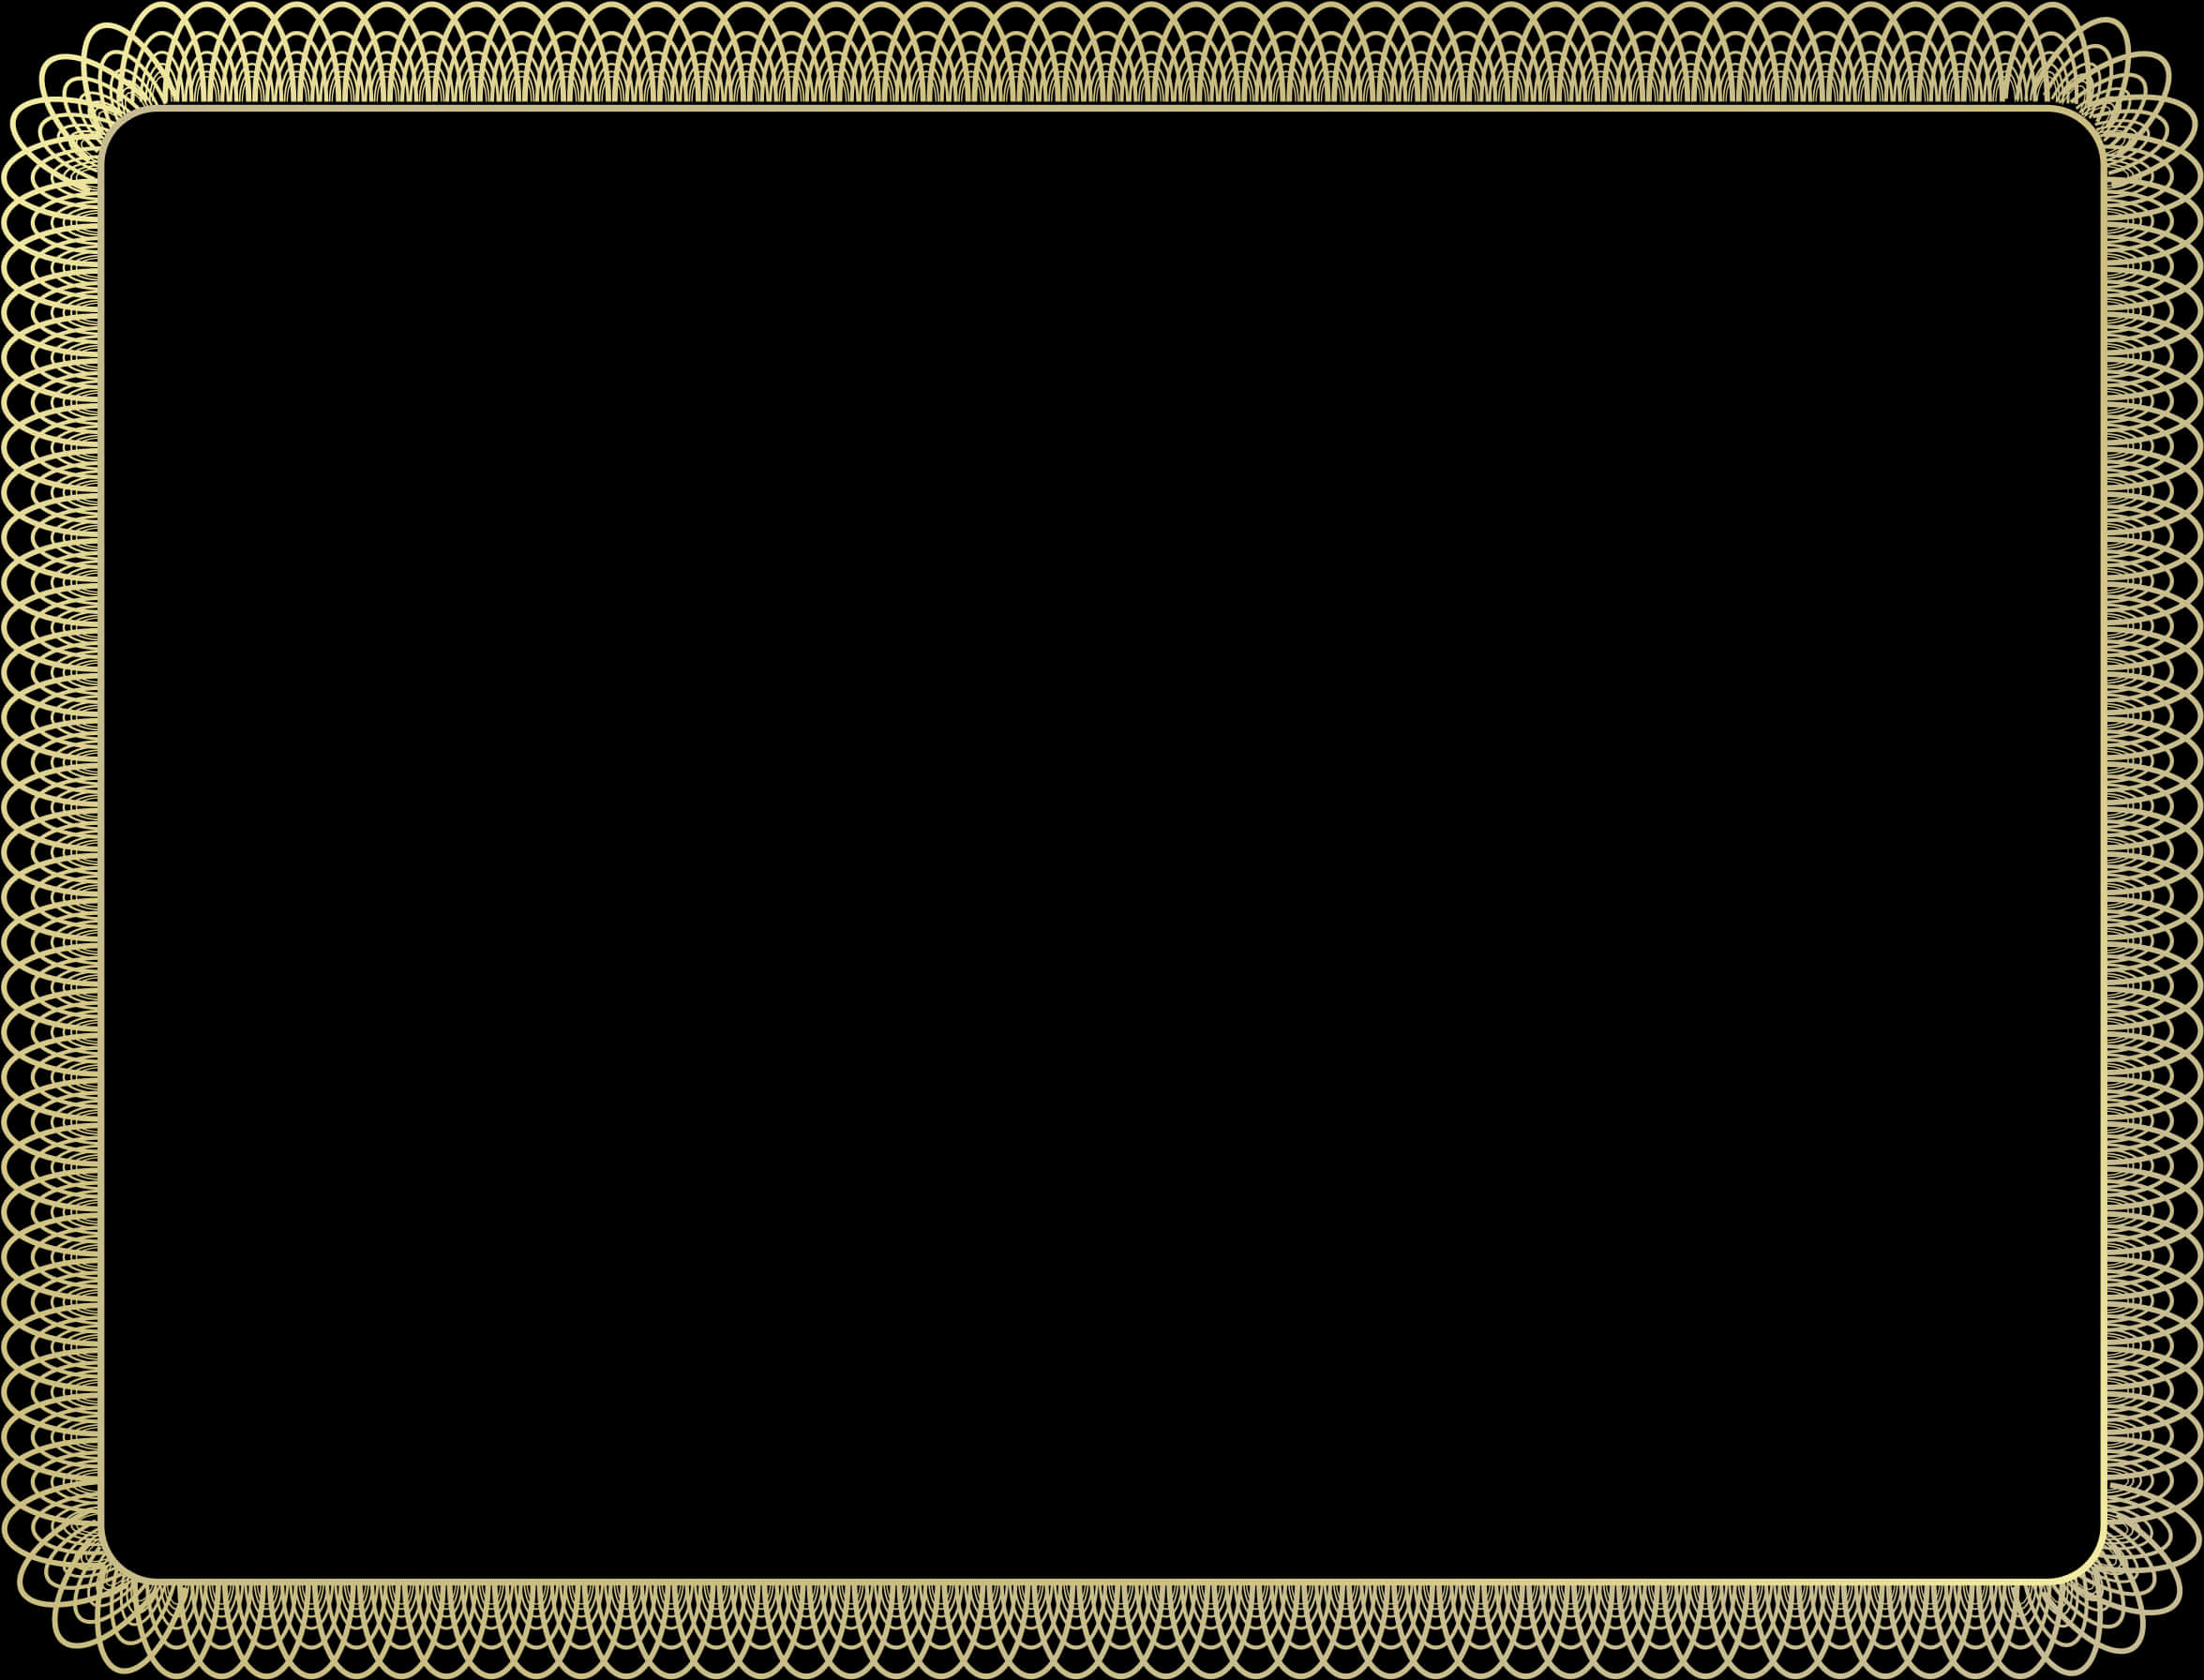 A Black Rectangular Frame With Gold Border